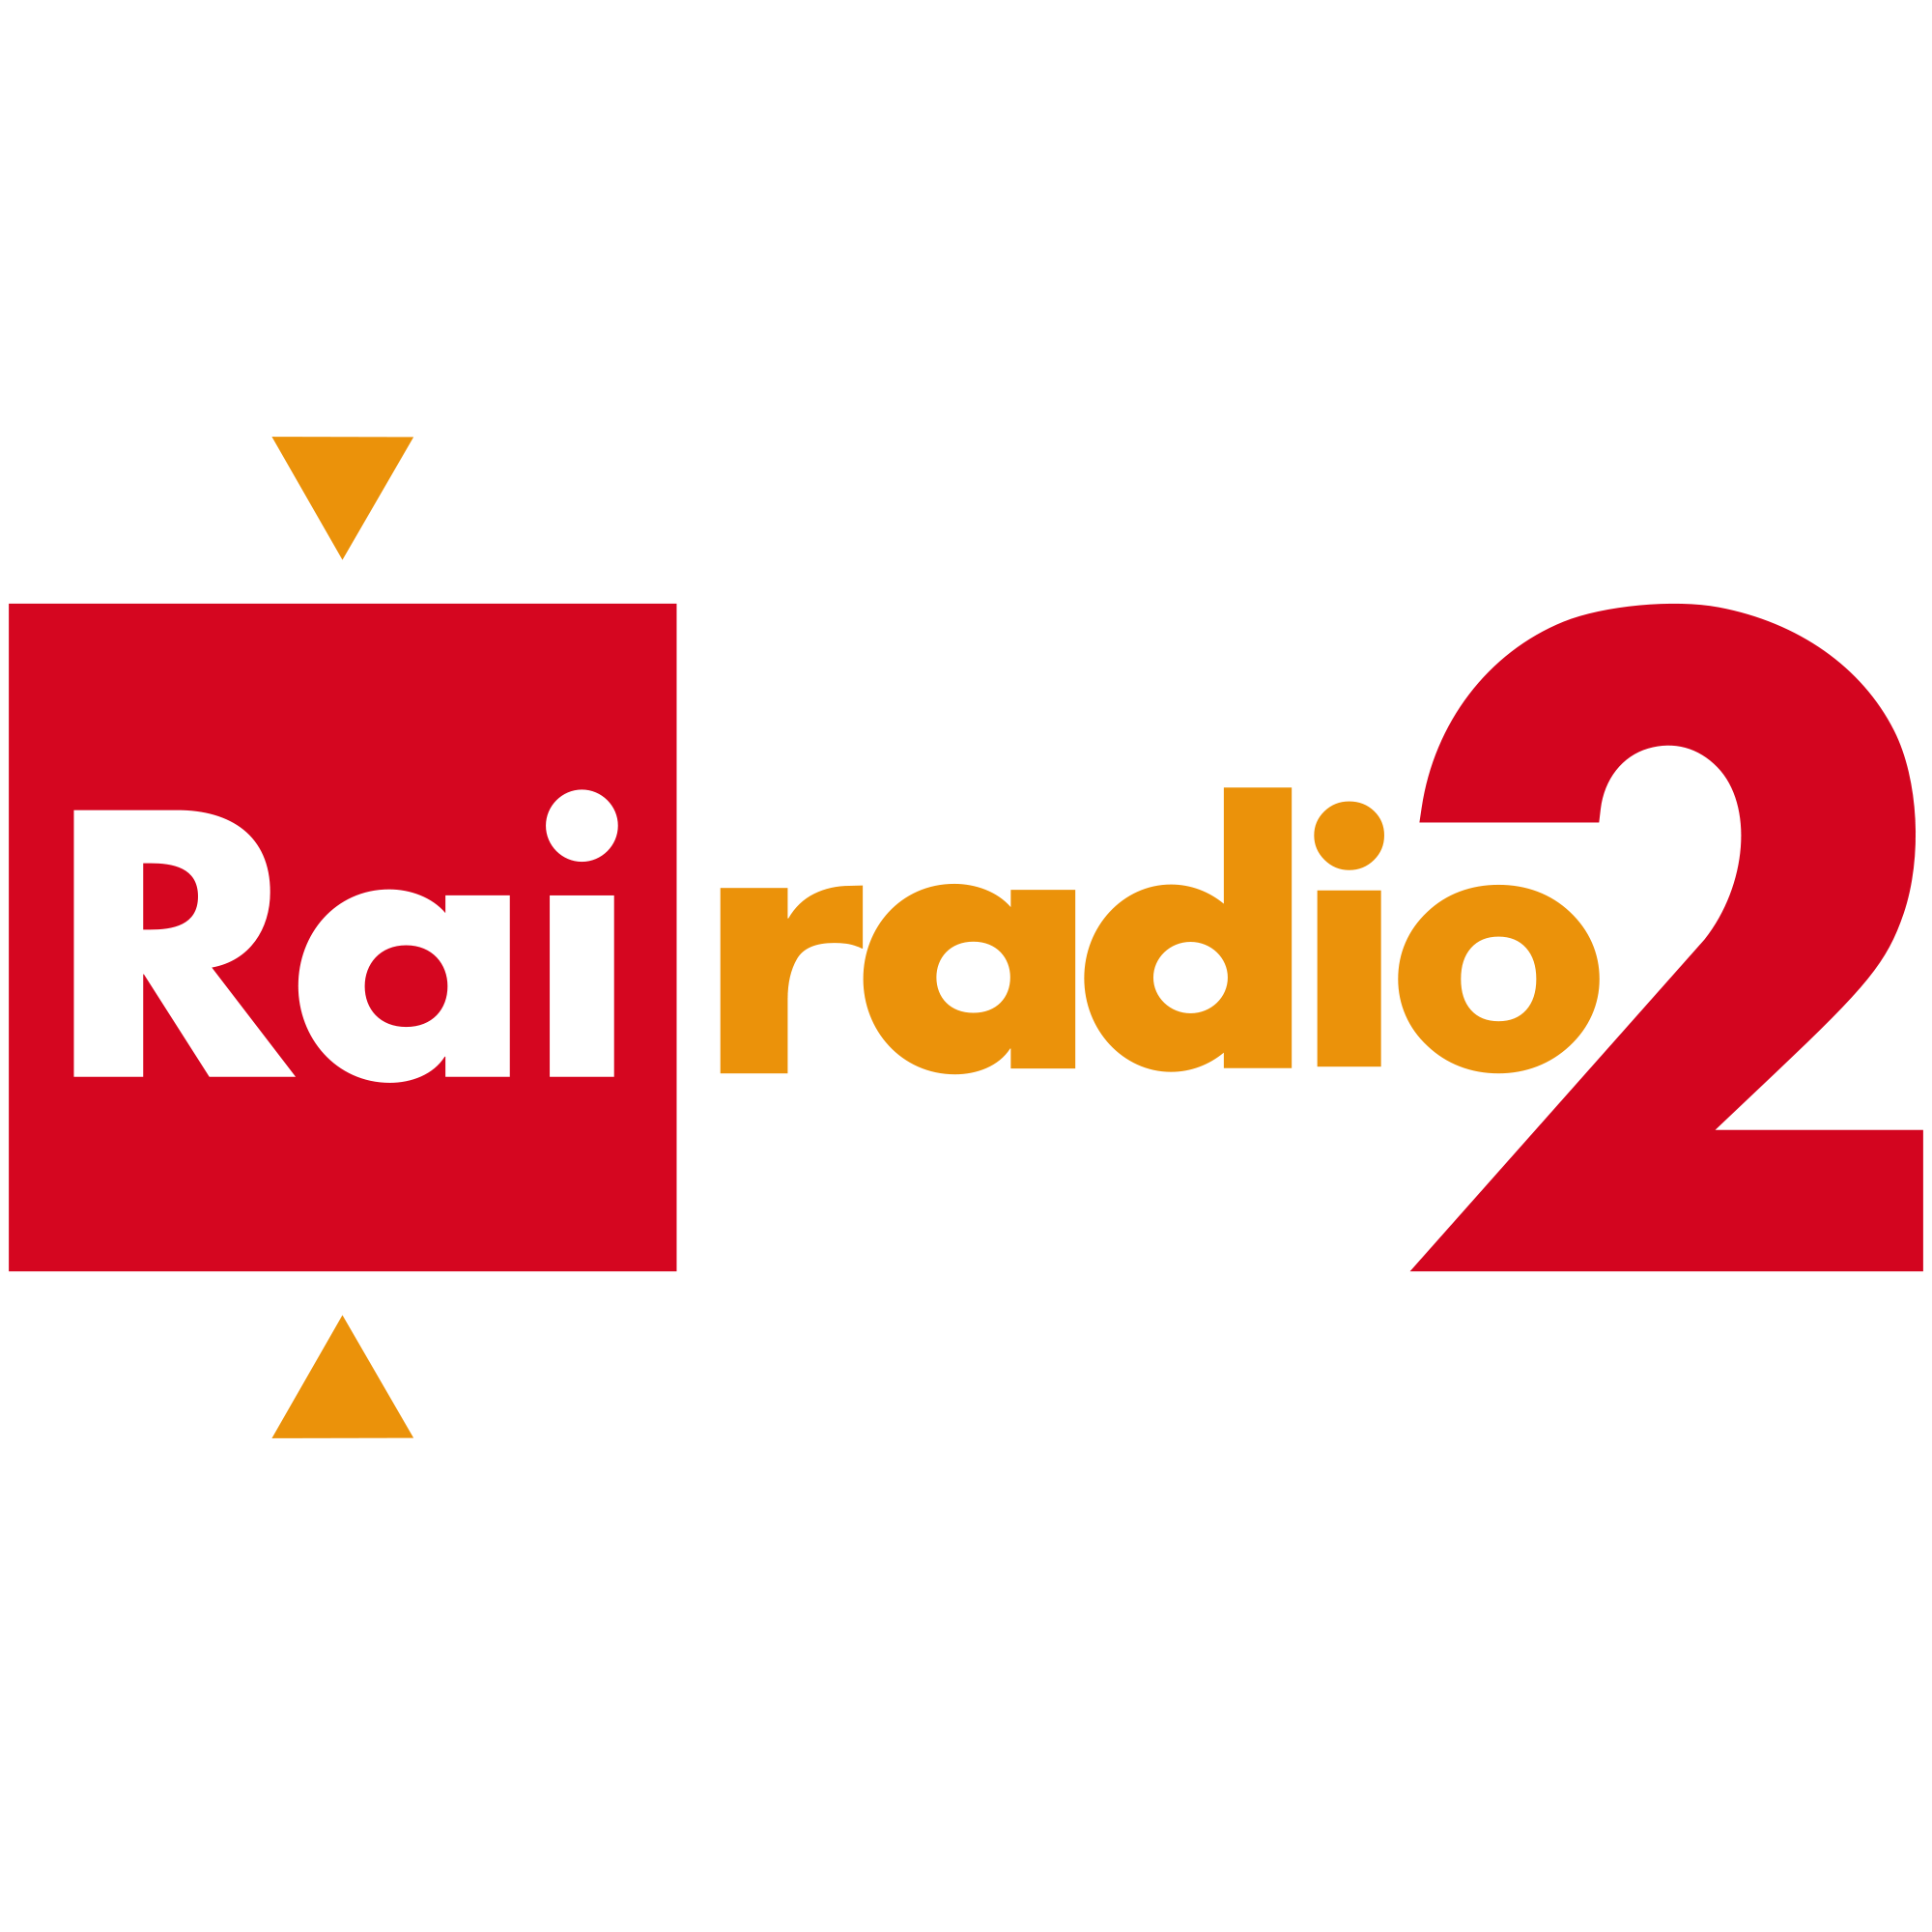 RAI Radiodue